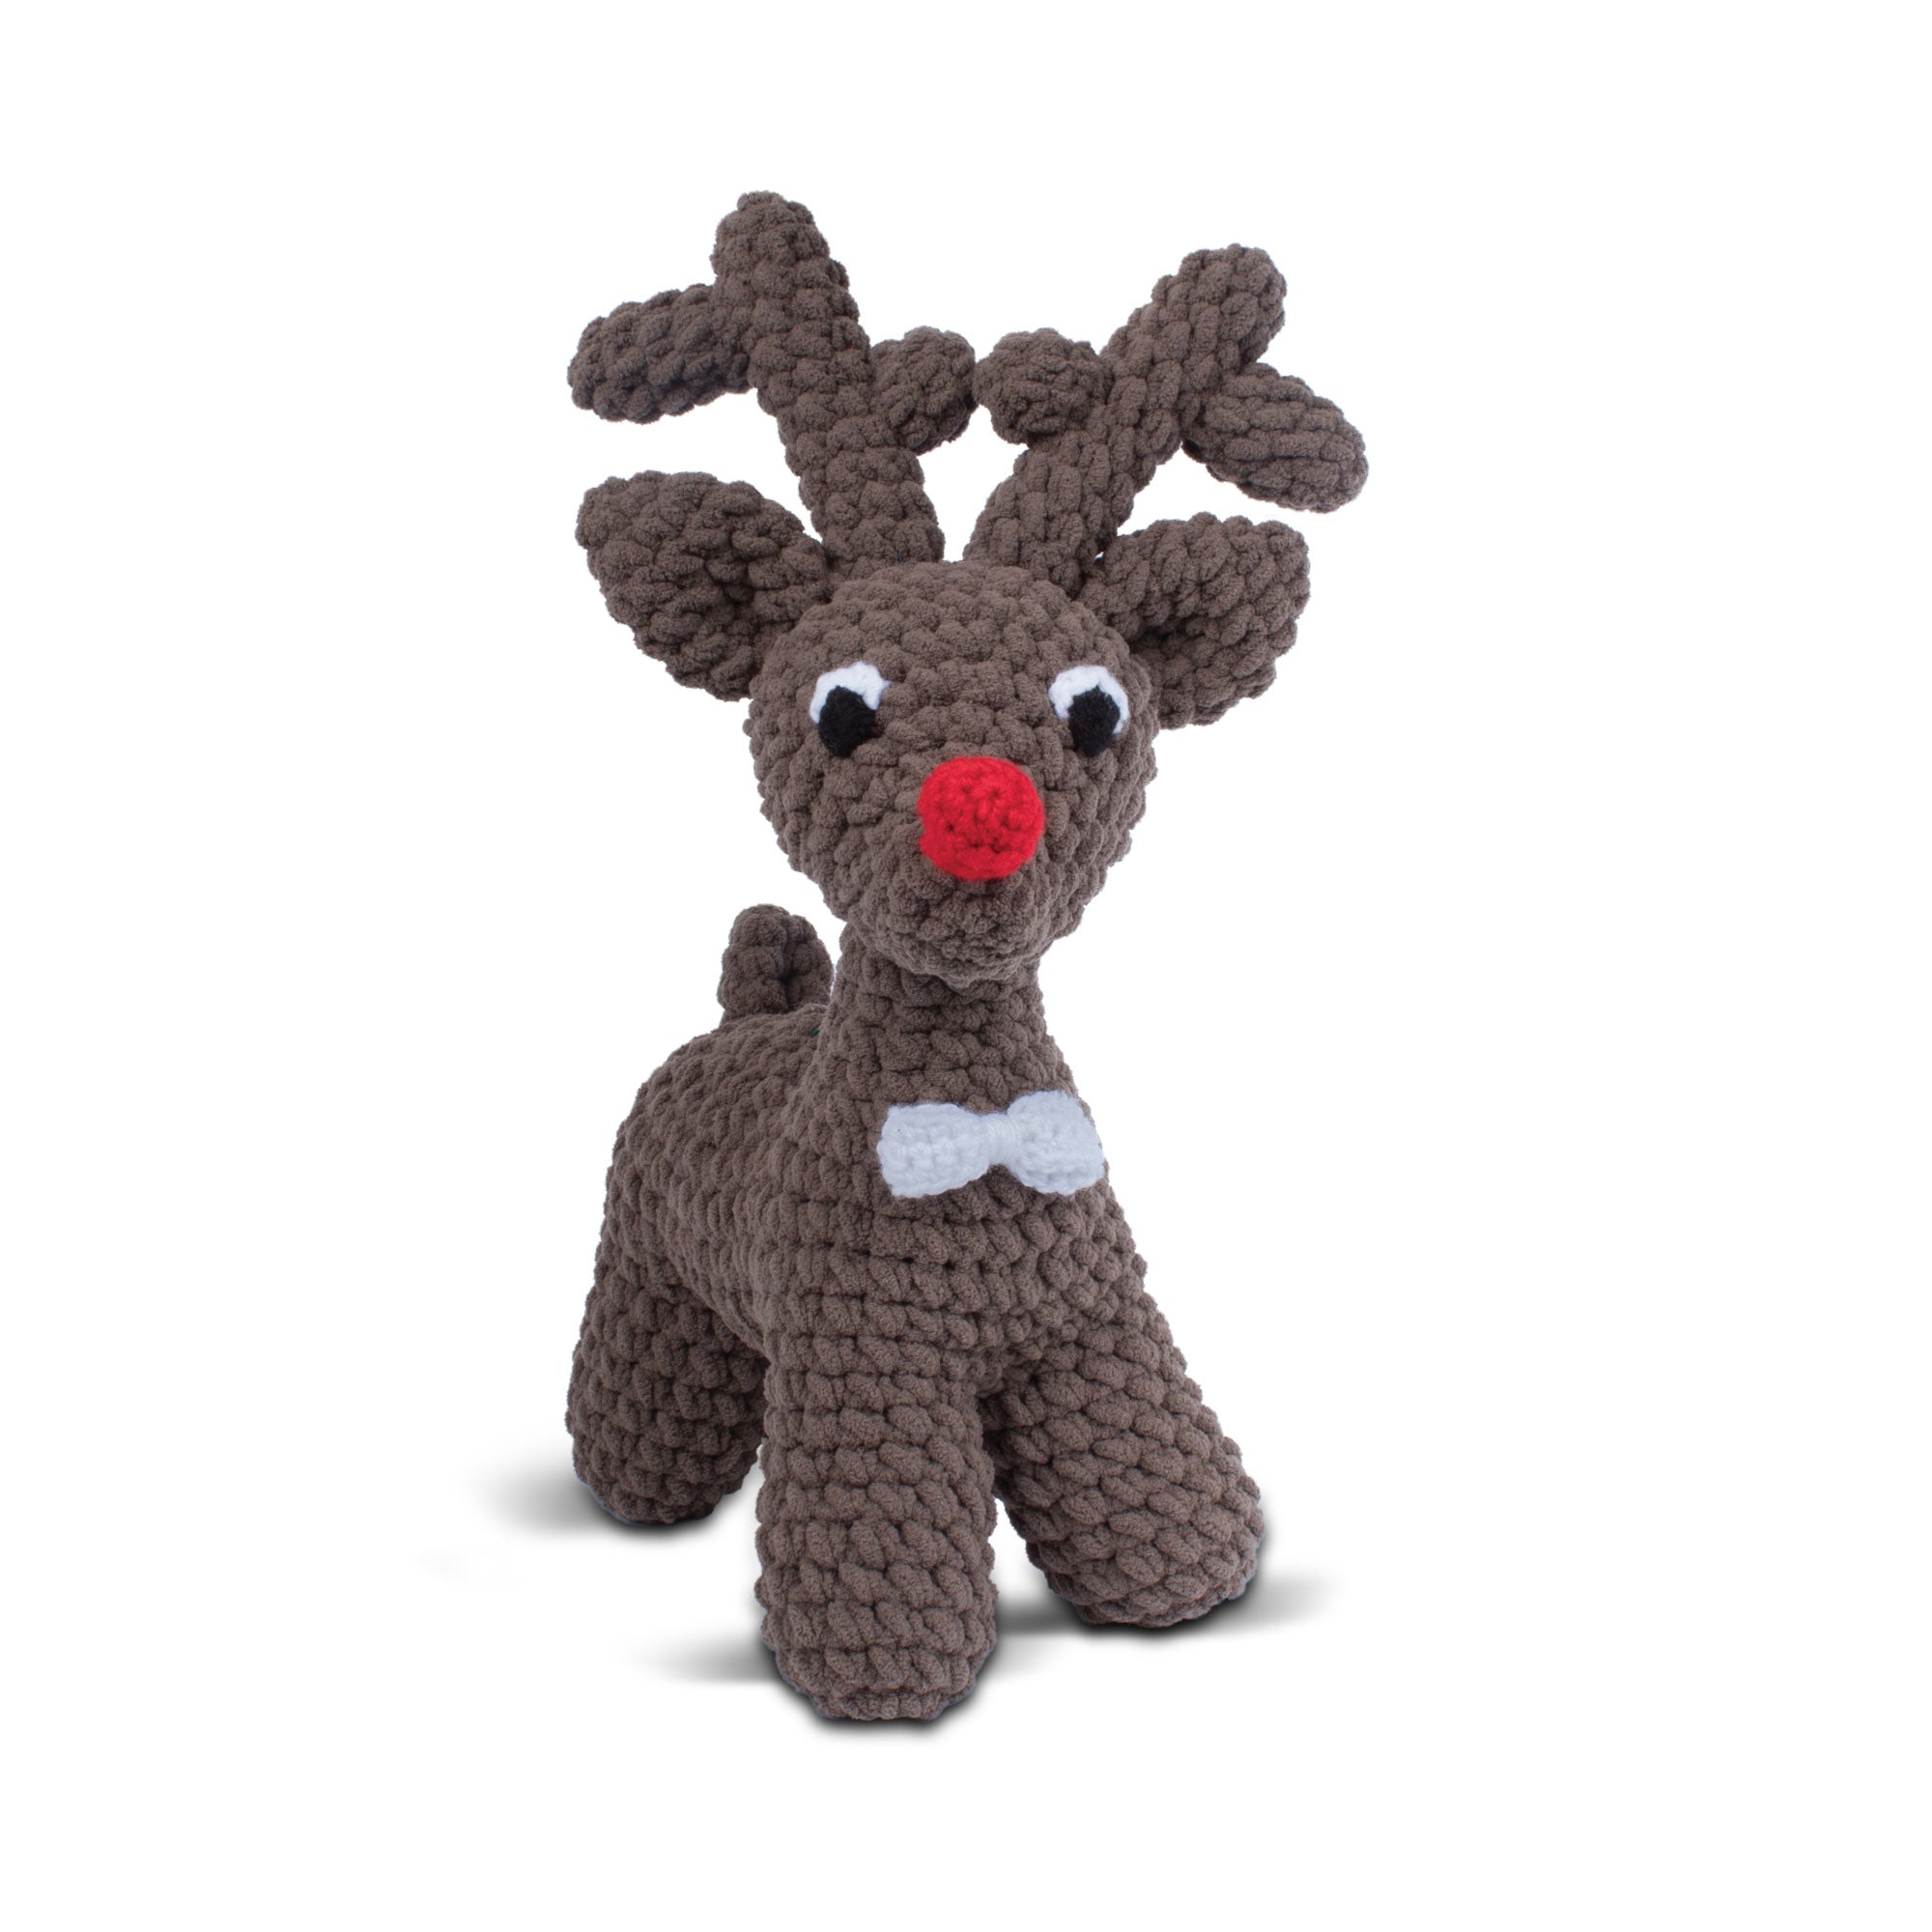 Crochet Santa Santa's Sleigh Amigurumi DIY Crochet Kit Christmas Gift  Pattern Christmas Ornaments 